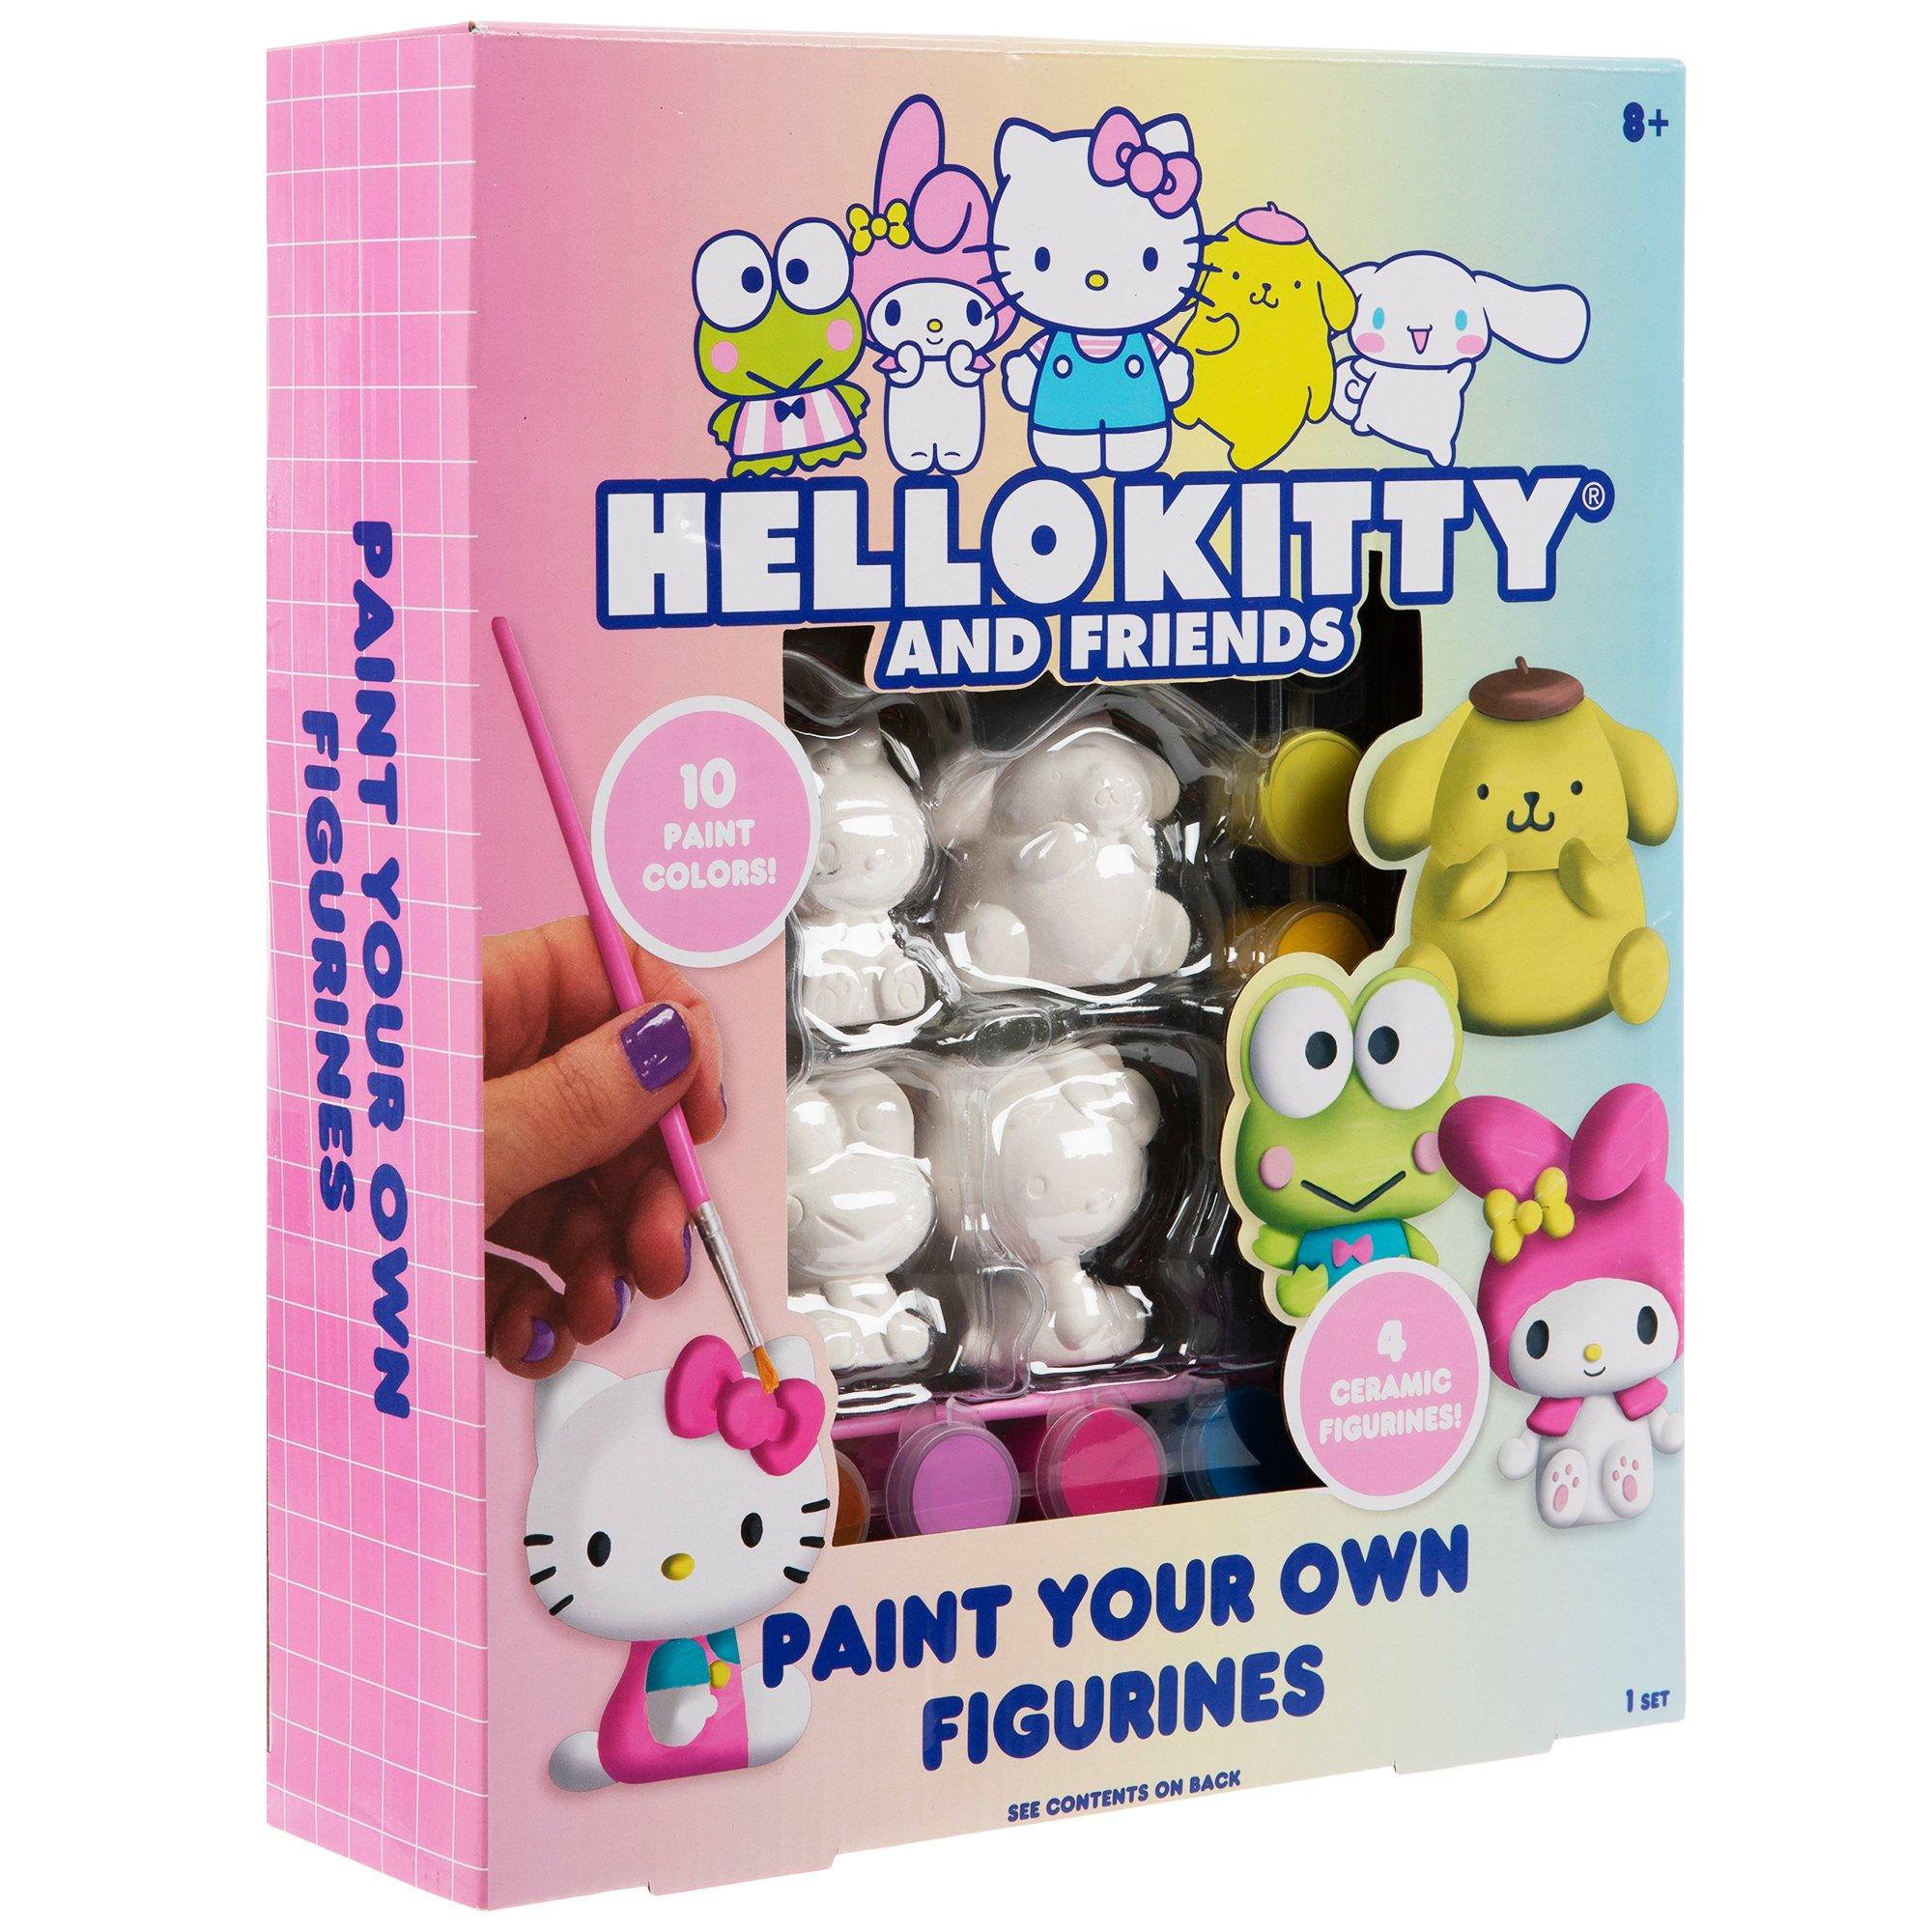 DIY Magic Water Beads Set 8 Colors Hello Kitty, Toys \ Creative toys